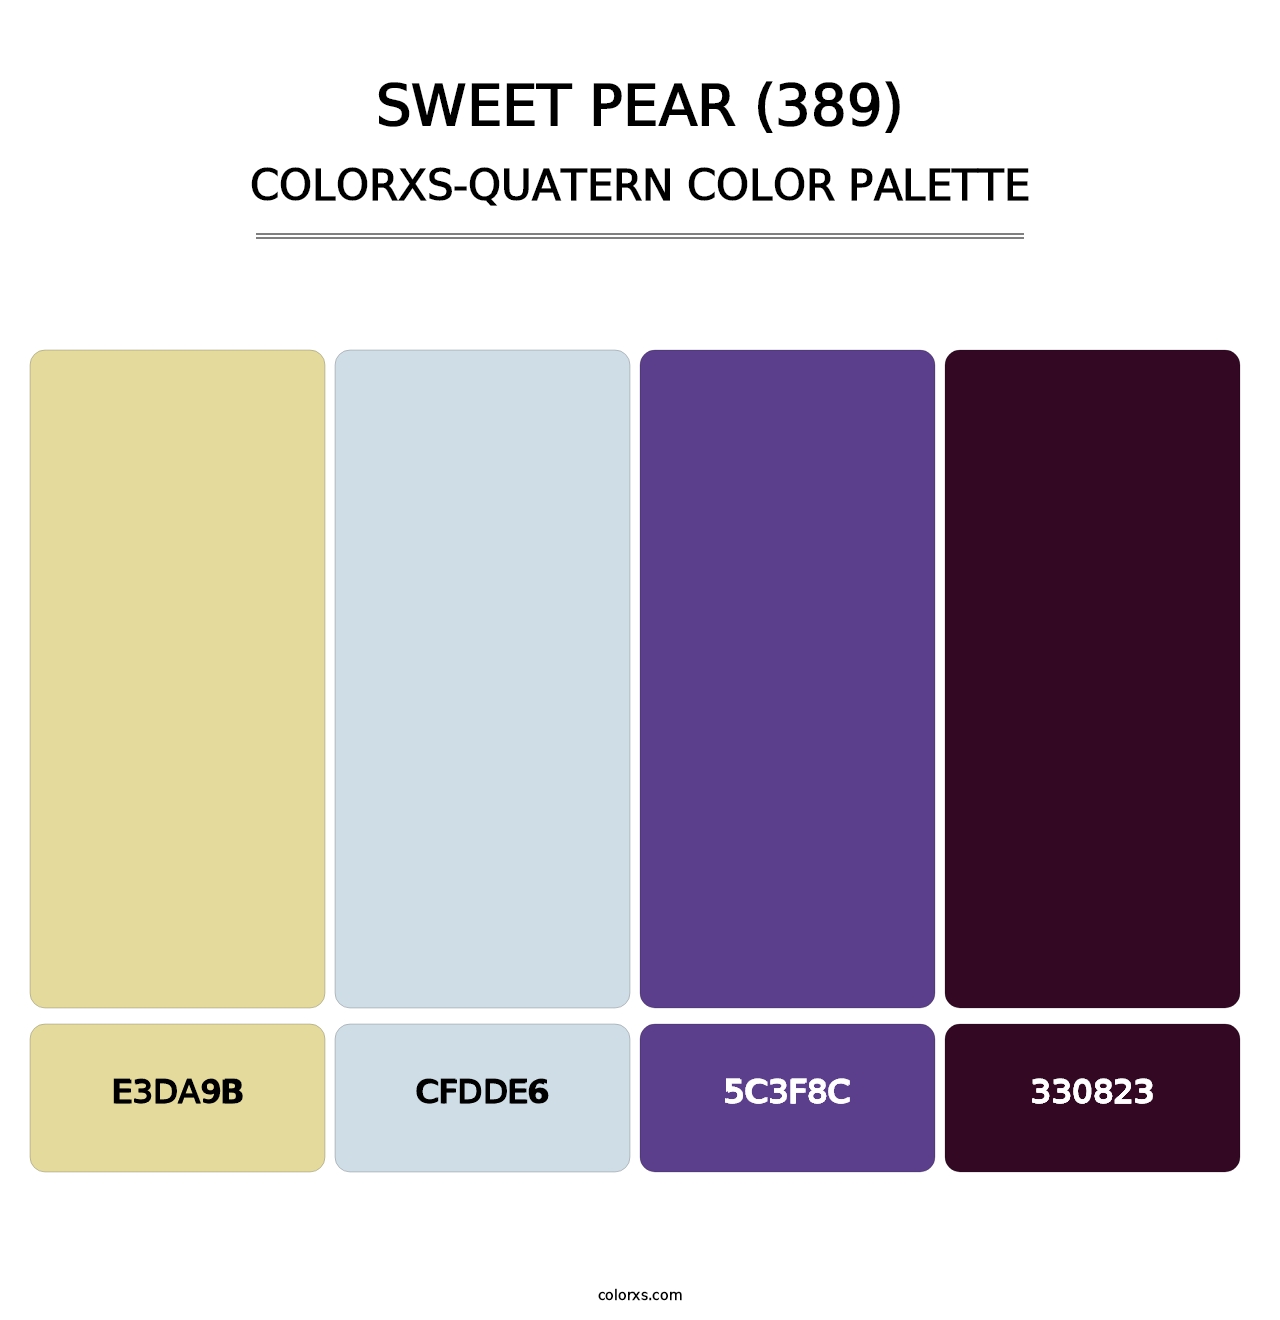 Sweet Pear (389) - Colorxs Quatern Palette